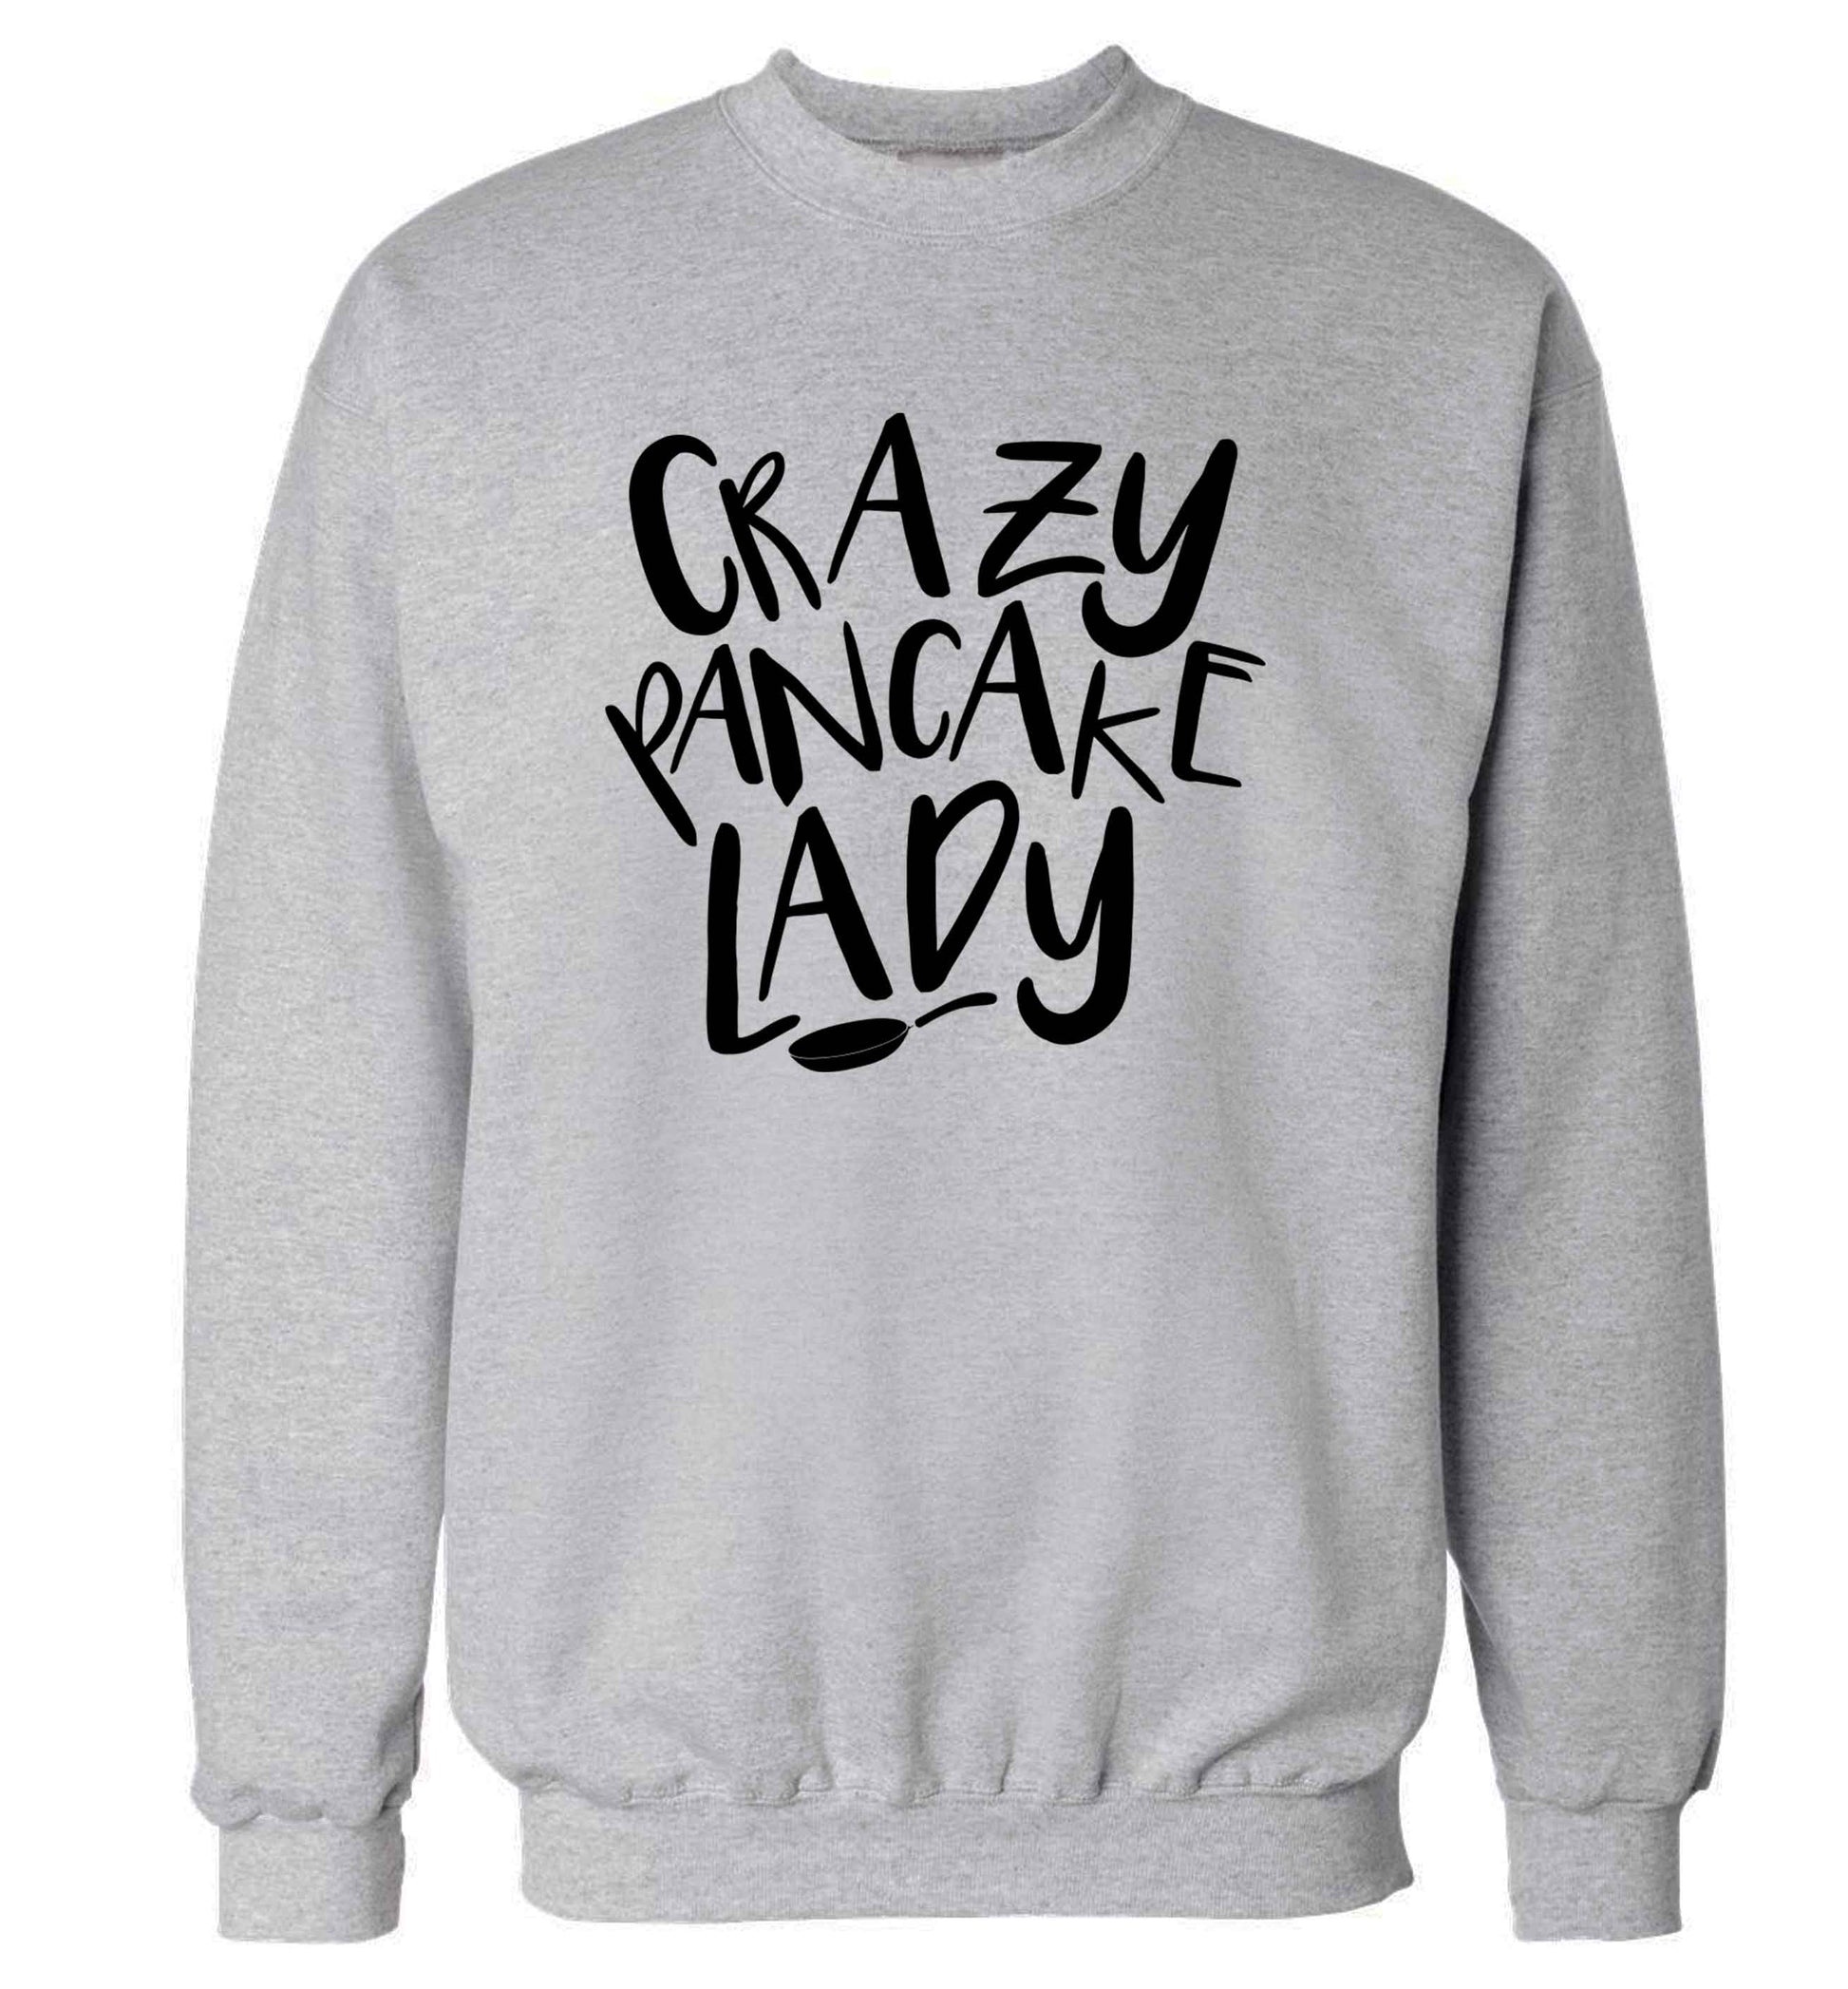 Crazy pancake lady adult's unisex grey sweater 2XL